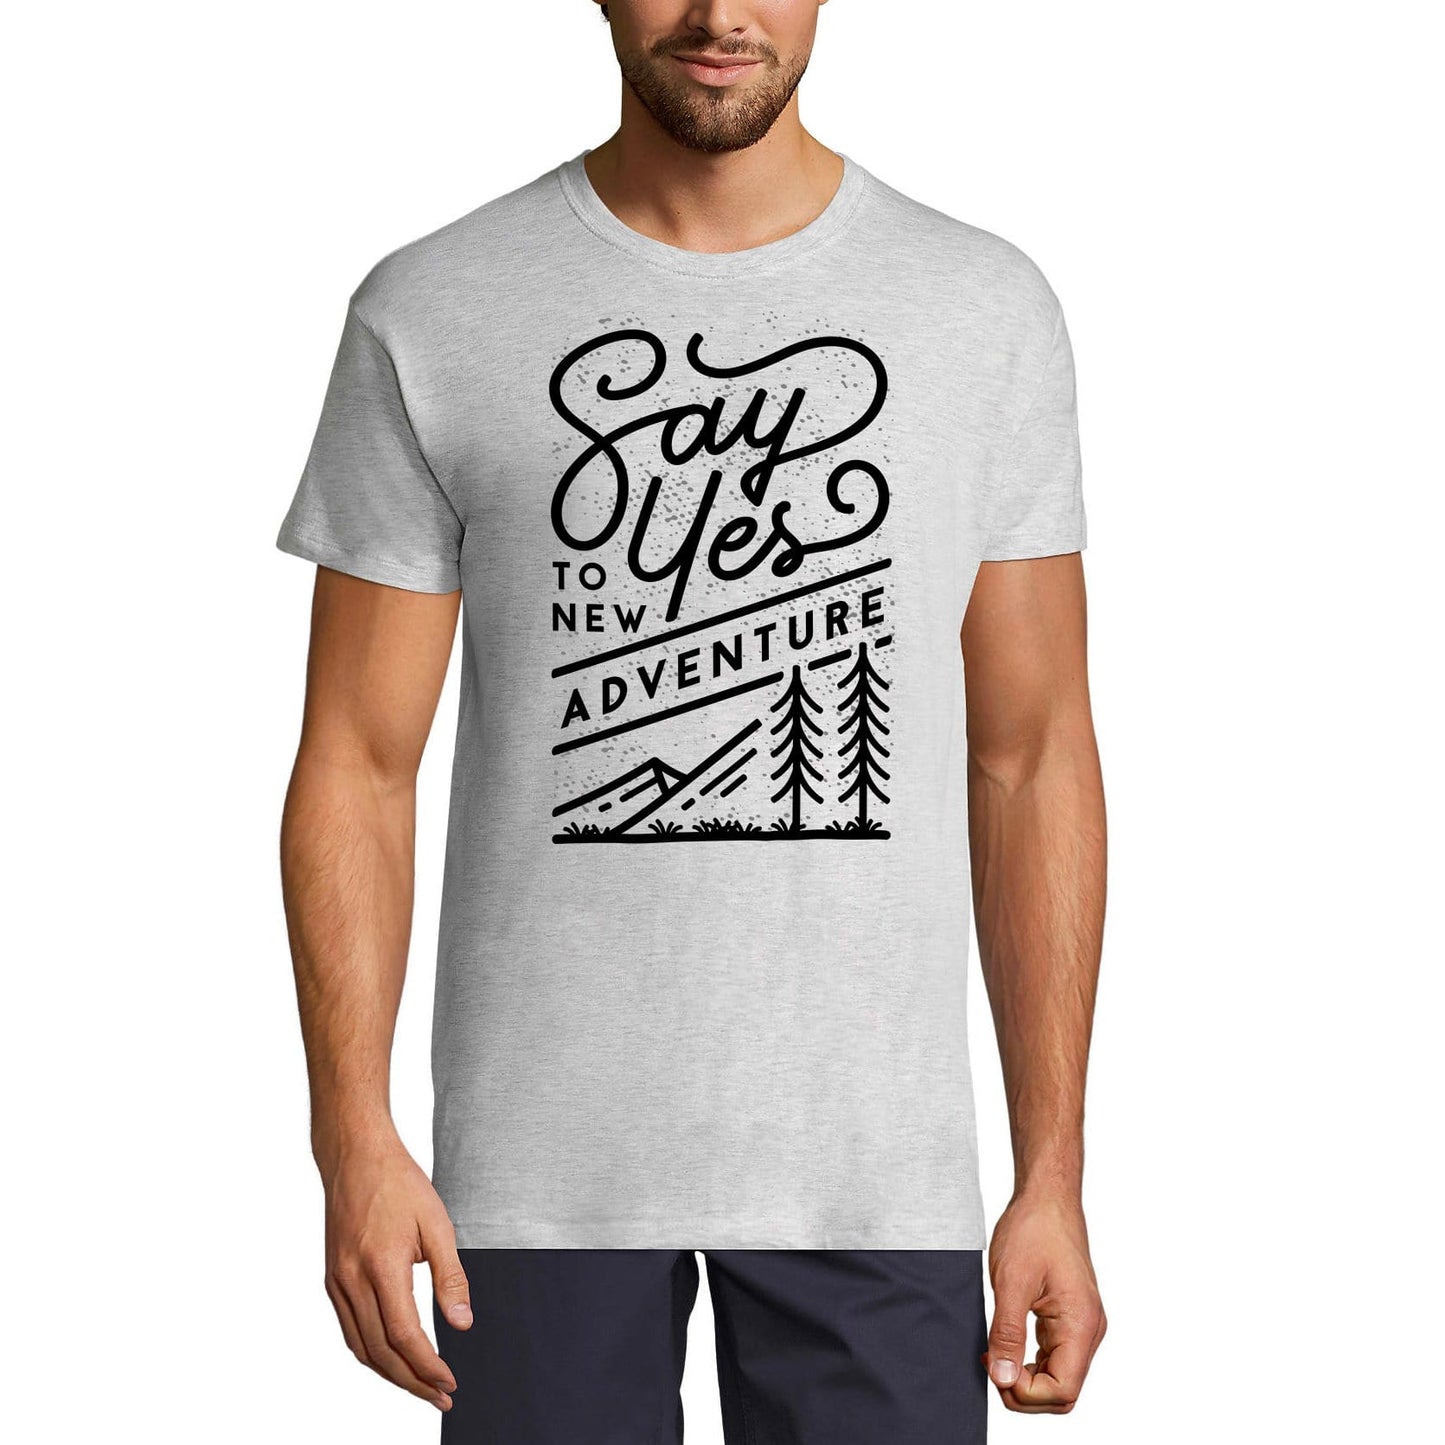 ULTRABASIC Men's T-Shirt Say yes to new adventure - Short Sleeve Tee shirt